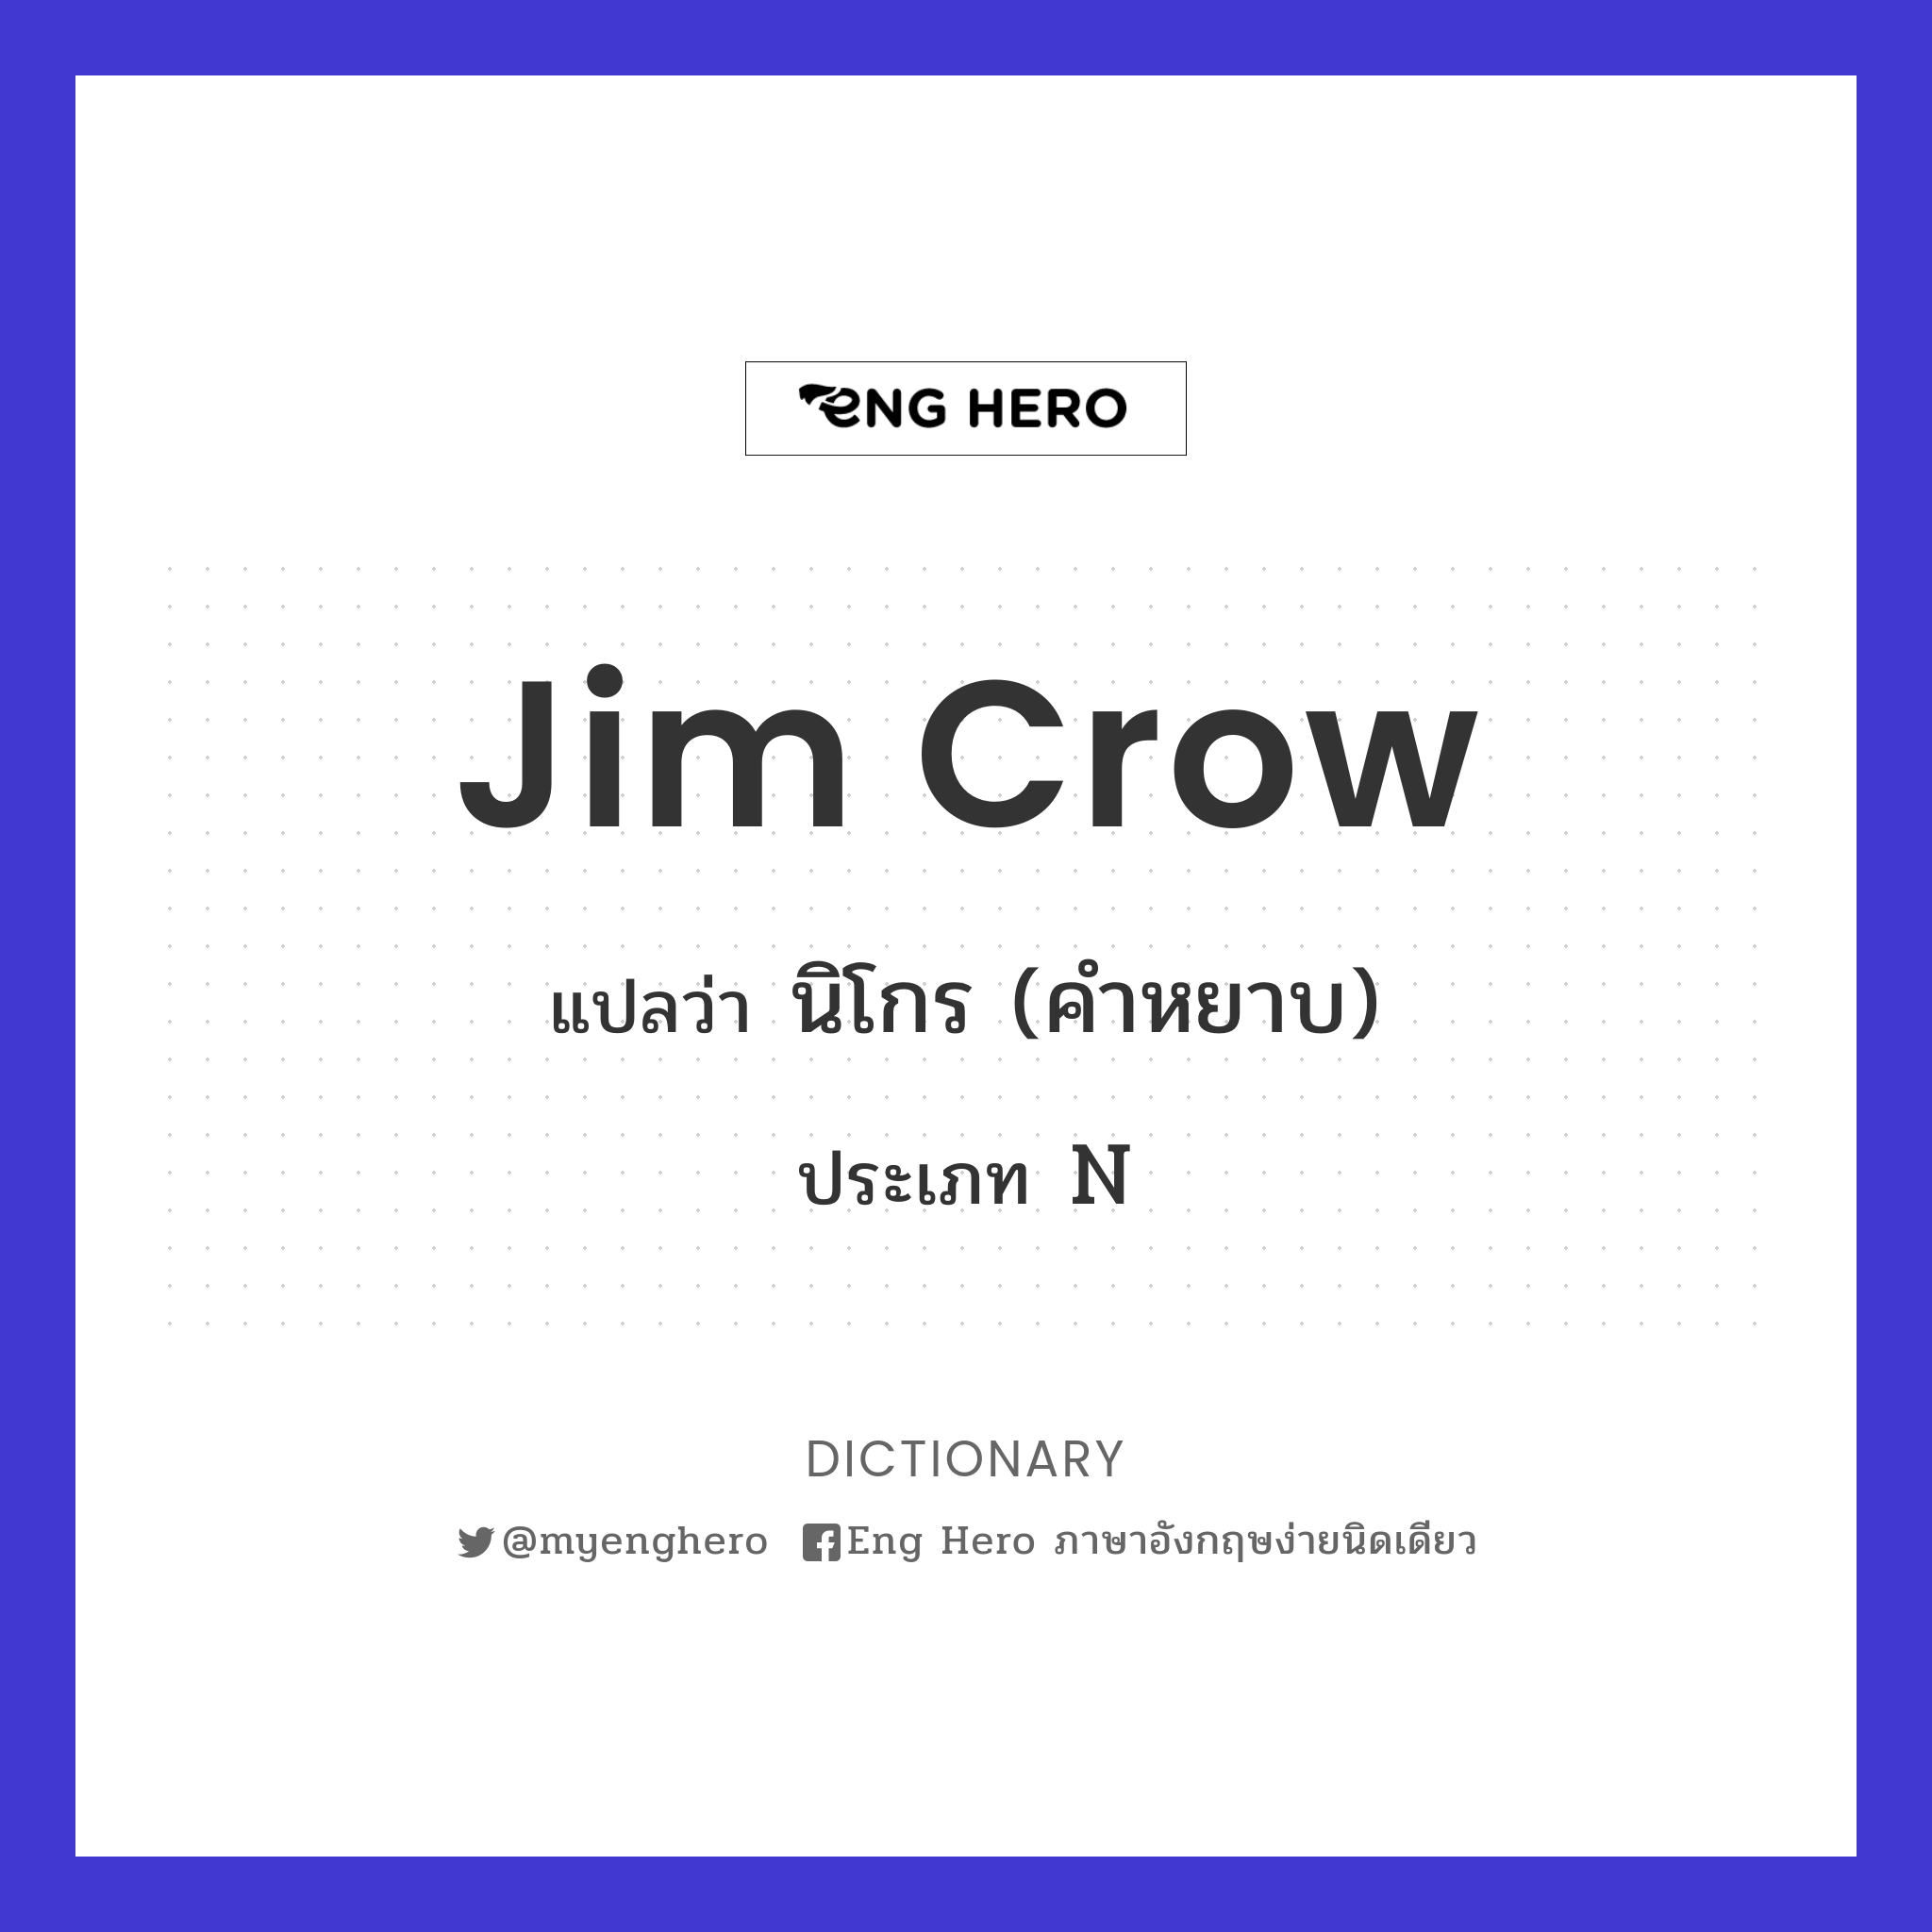 Jim Crow